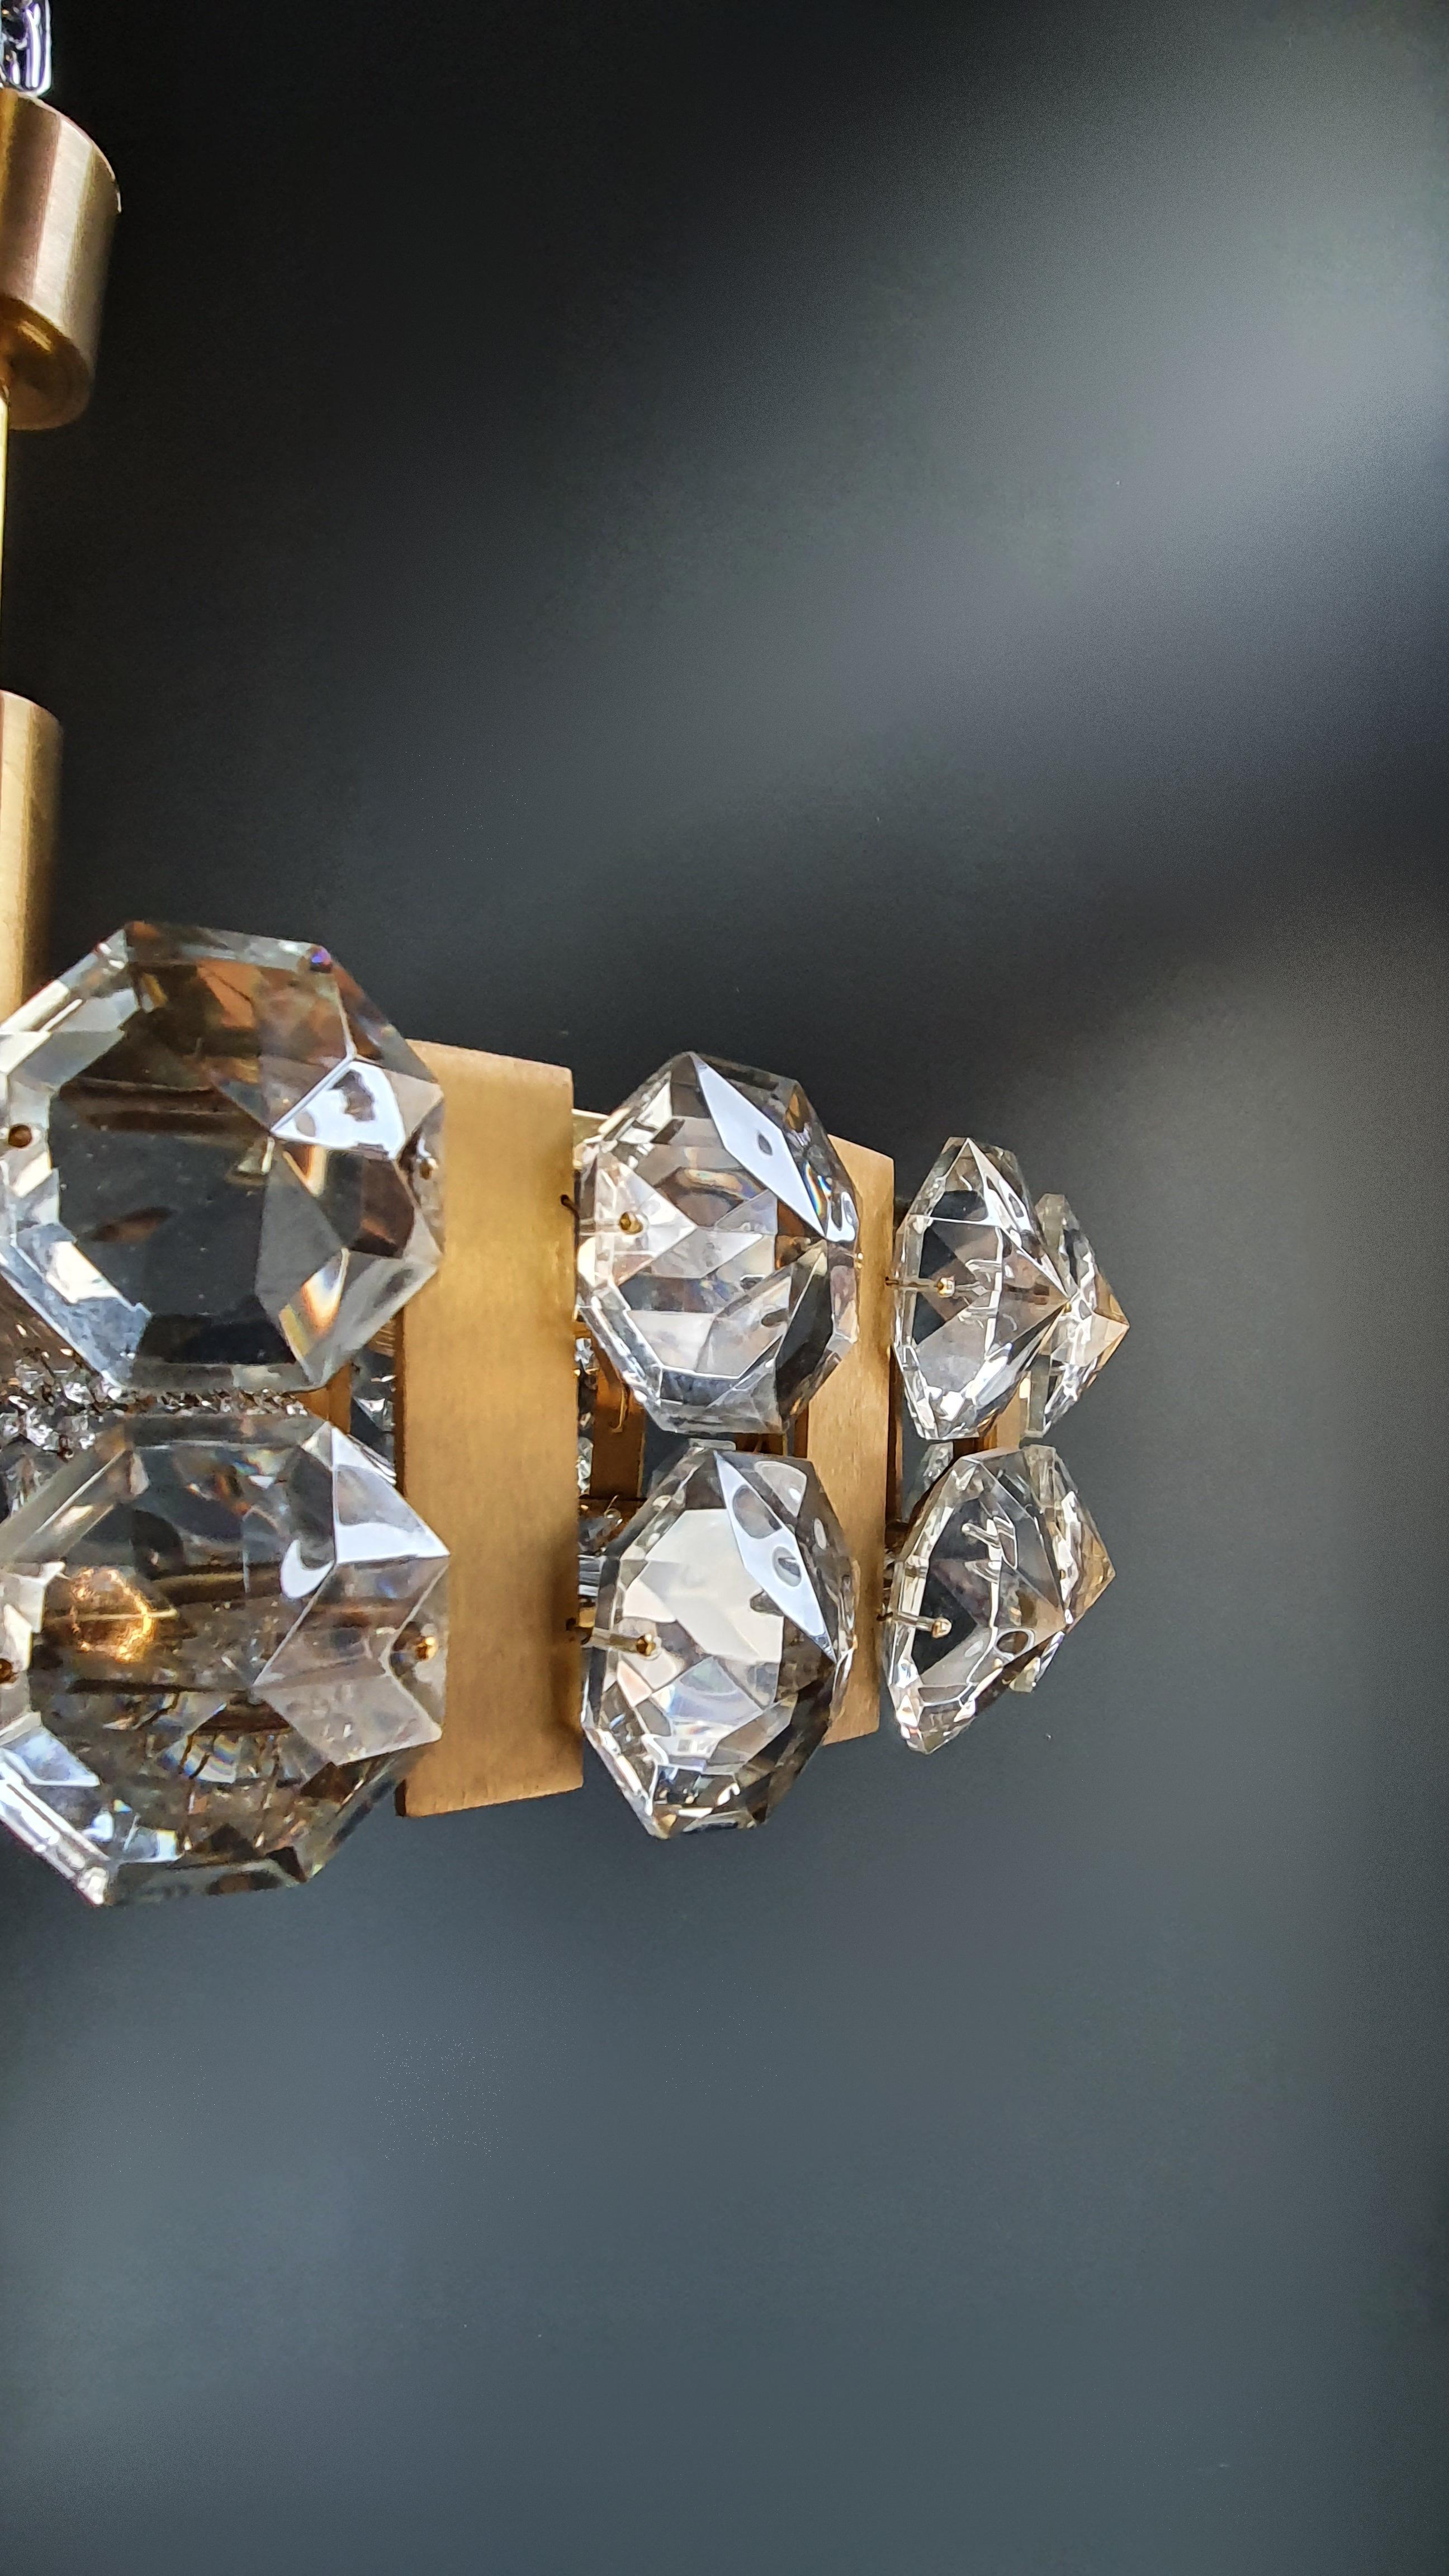 Bakalowits Vintage Crystal Flushmount Gold Chandelier Ceiling Low 1960s 1